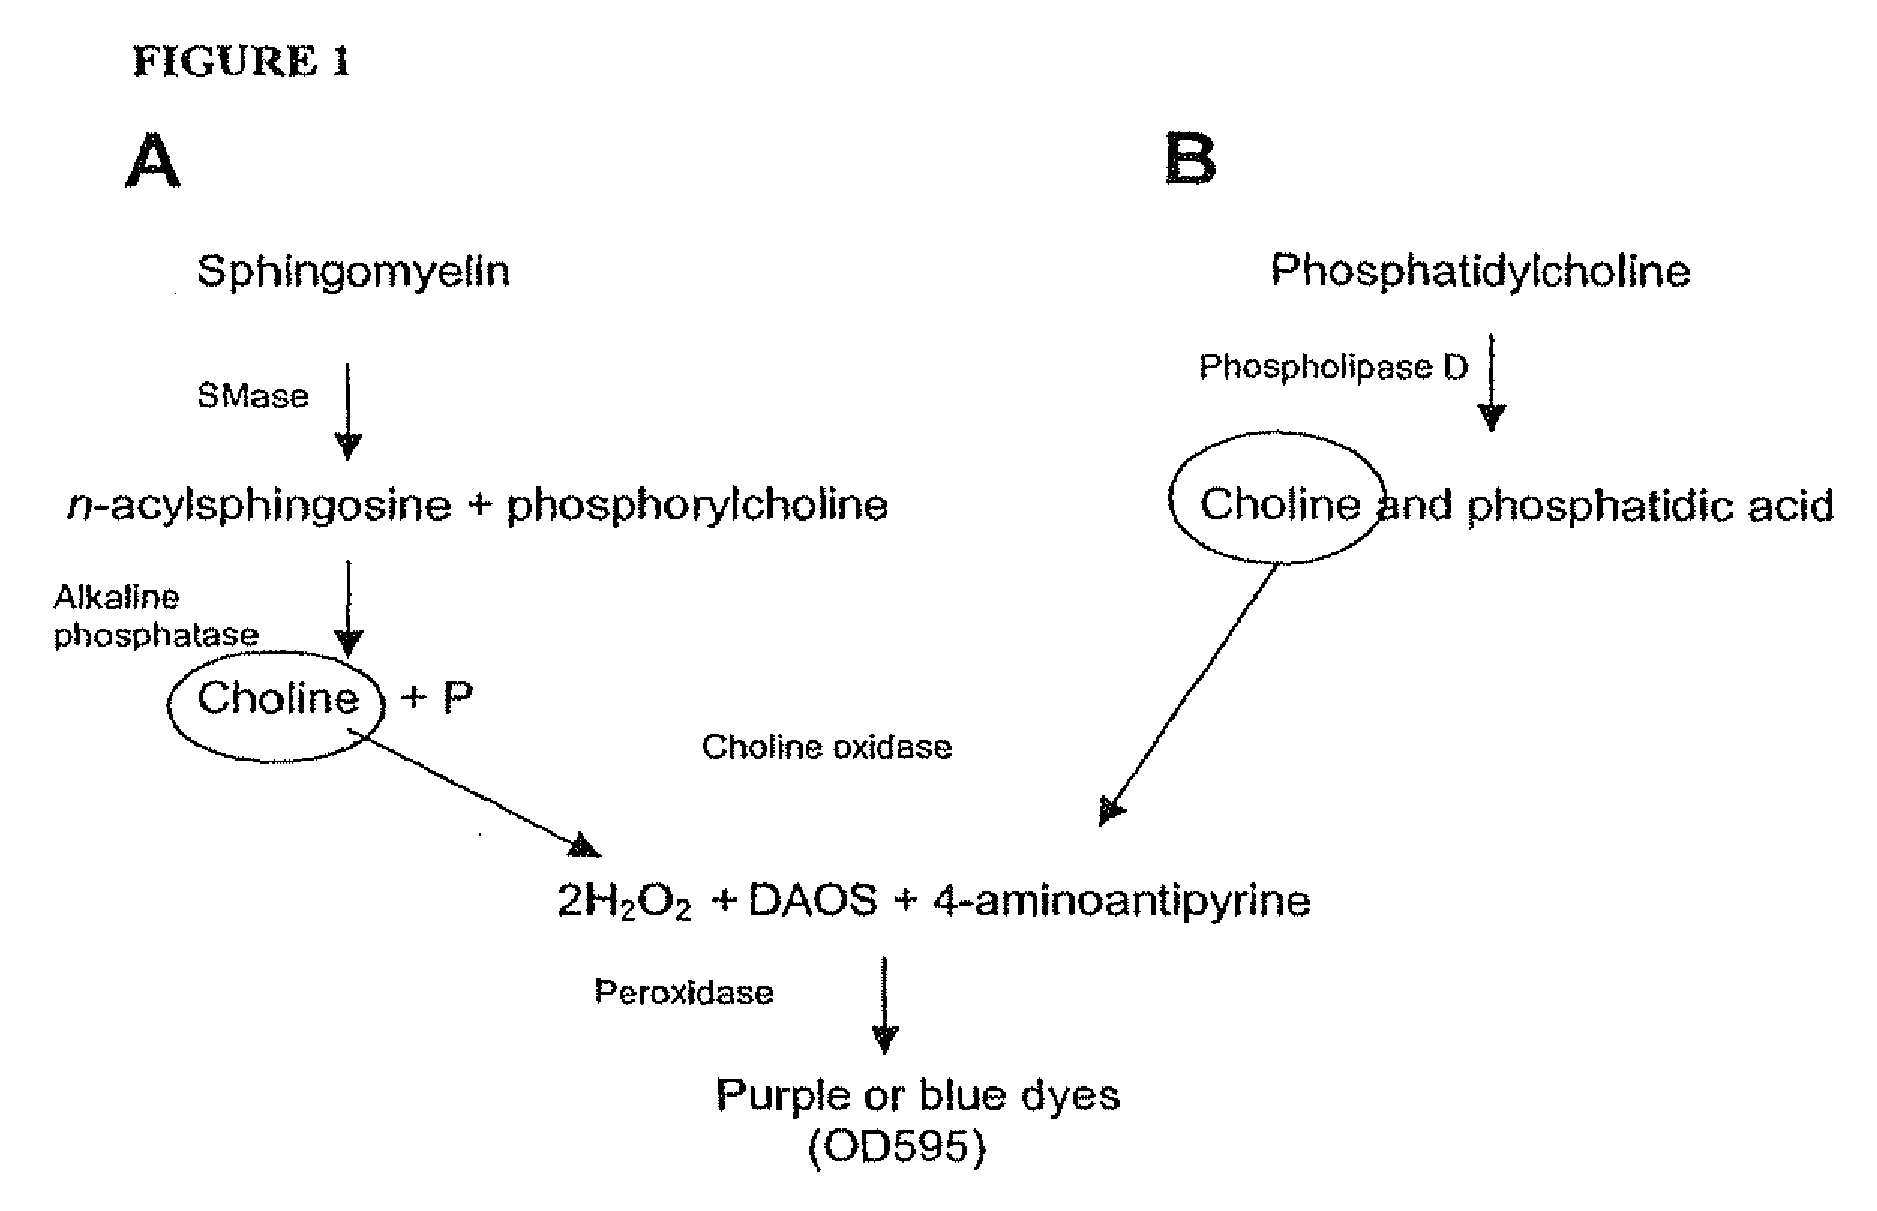 Enzymatic methods for measuring plasma and tissue sphingomylelin and phosphatidylcholine